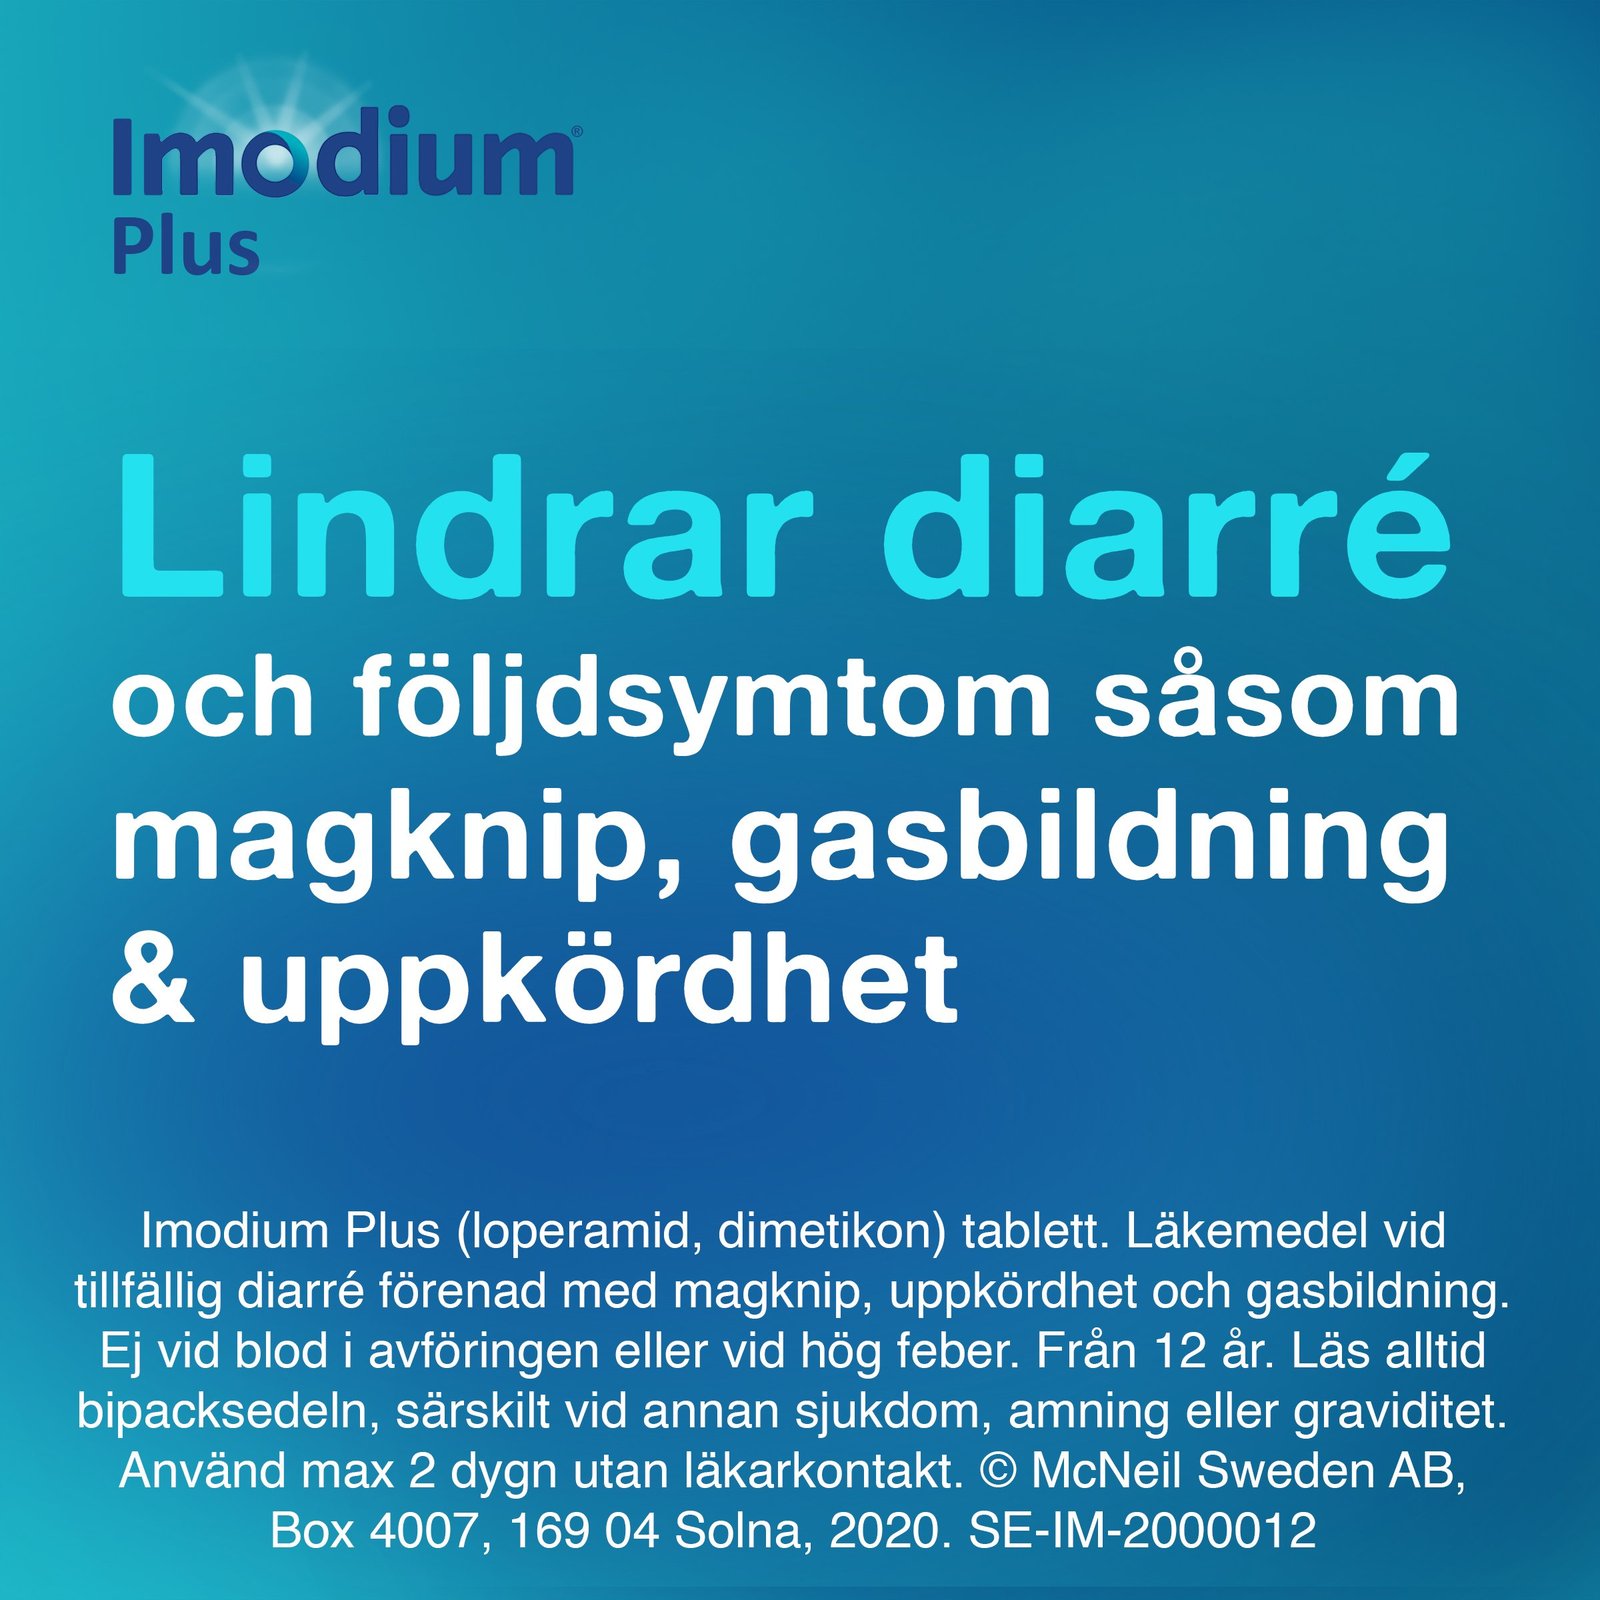 Imodium Plus 2mg/125mg tabletter, 12st